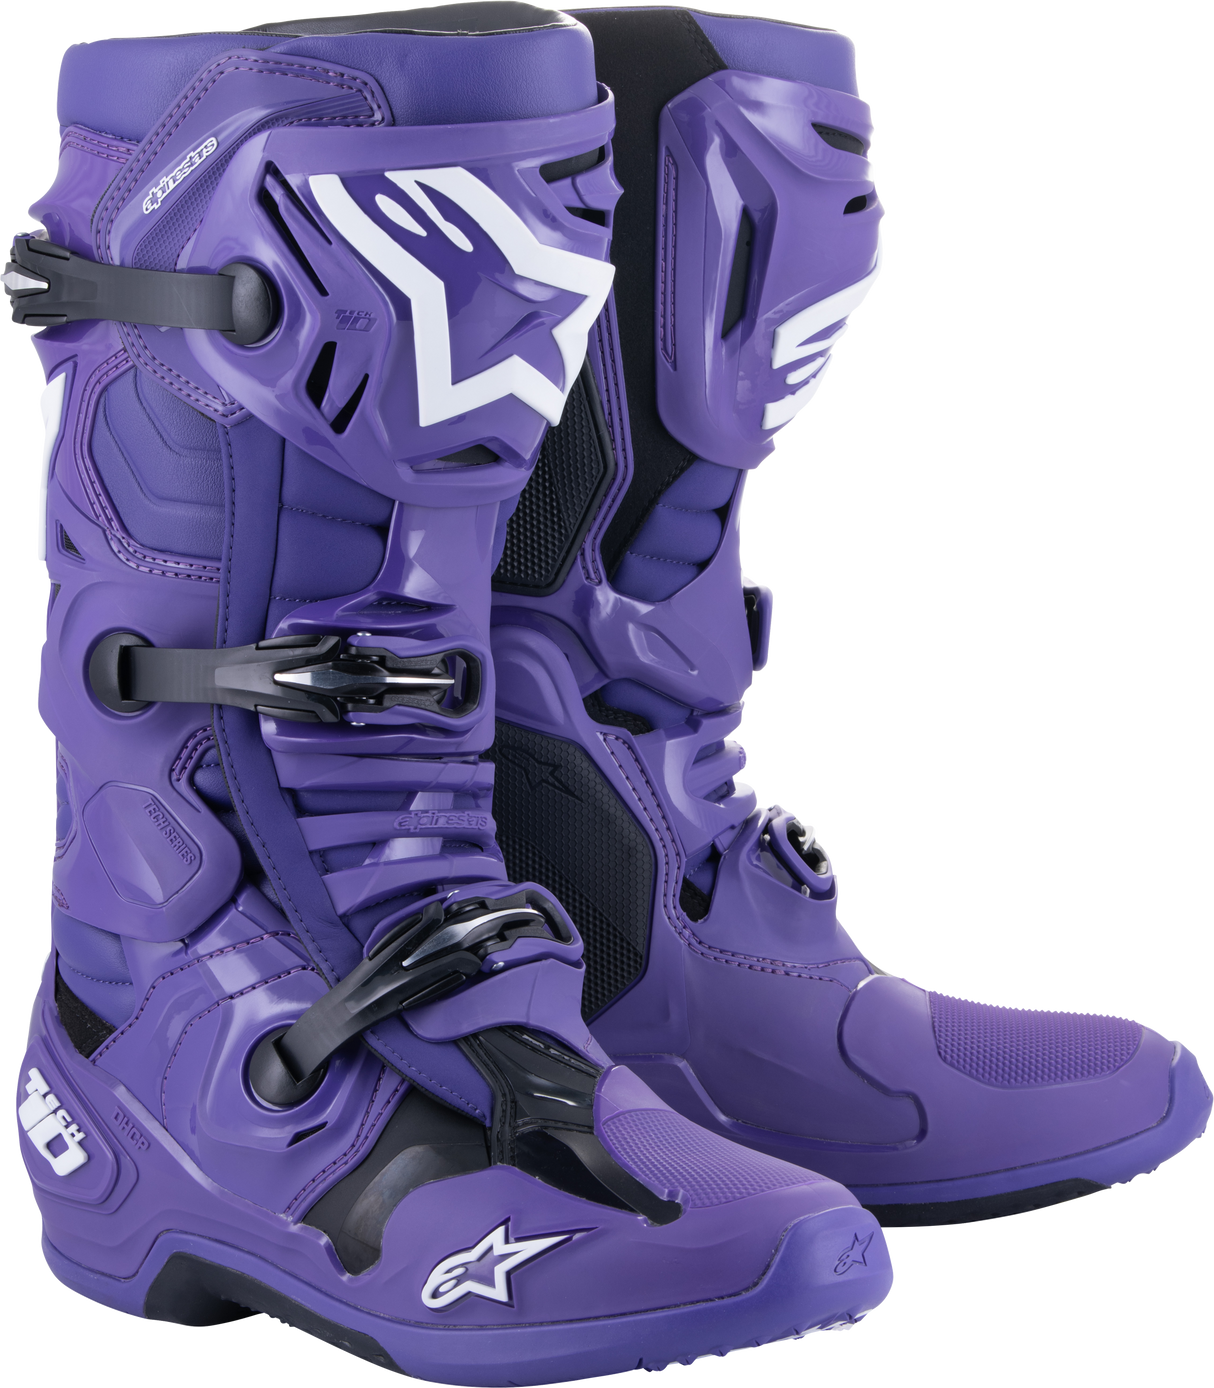 Tech 10 Boots Ultraviolet Black Sz 12